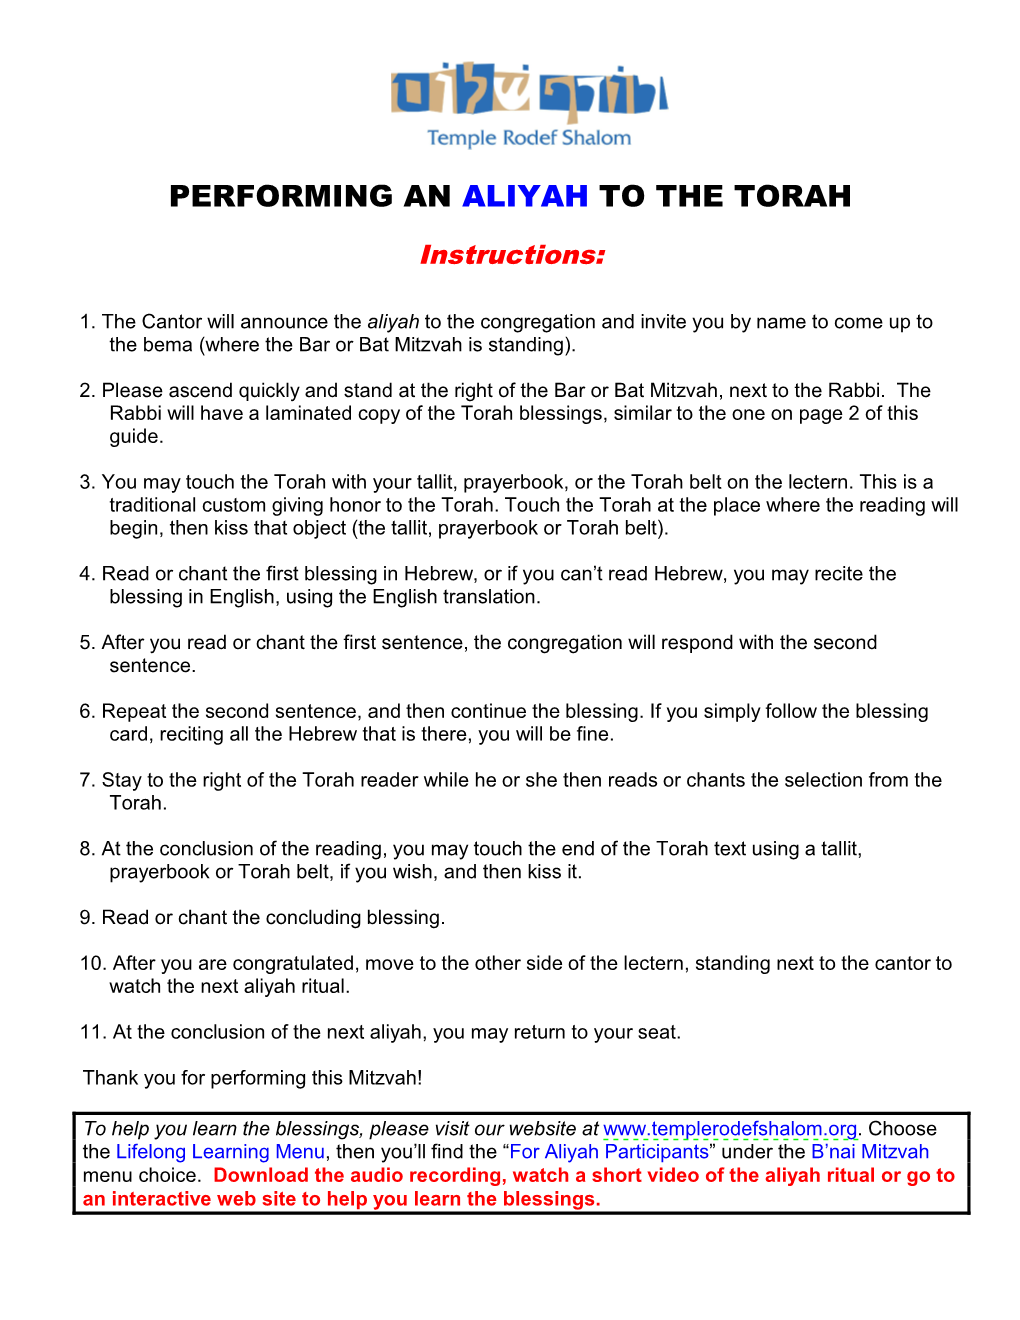 Performing an Aliyah to the Torah